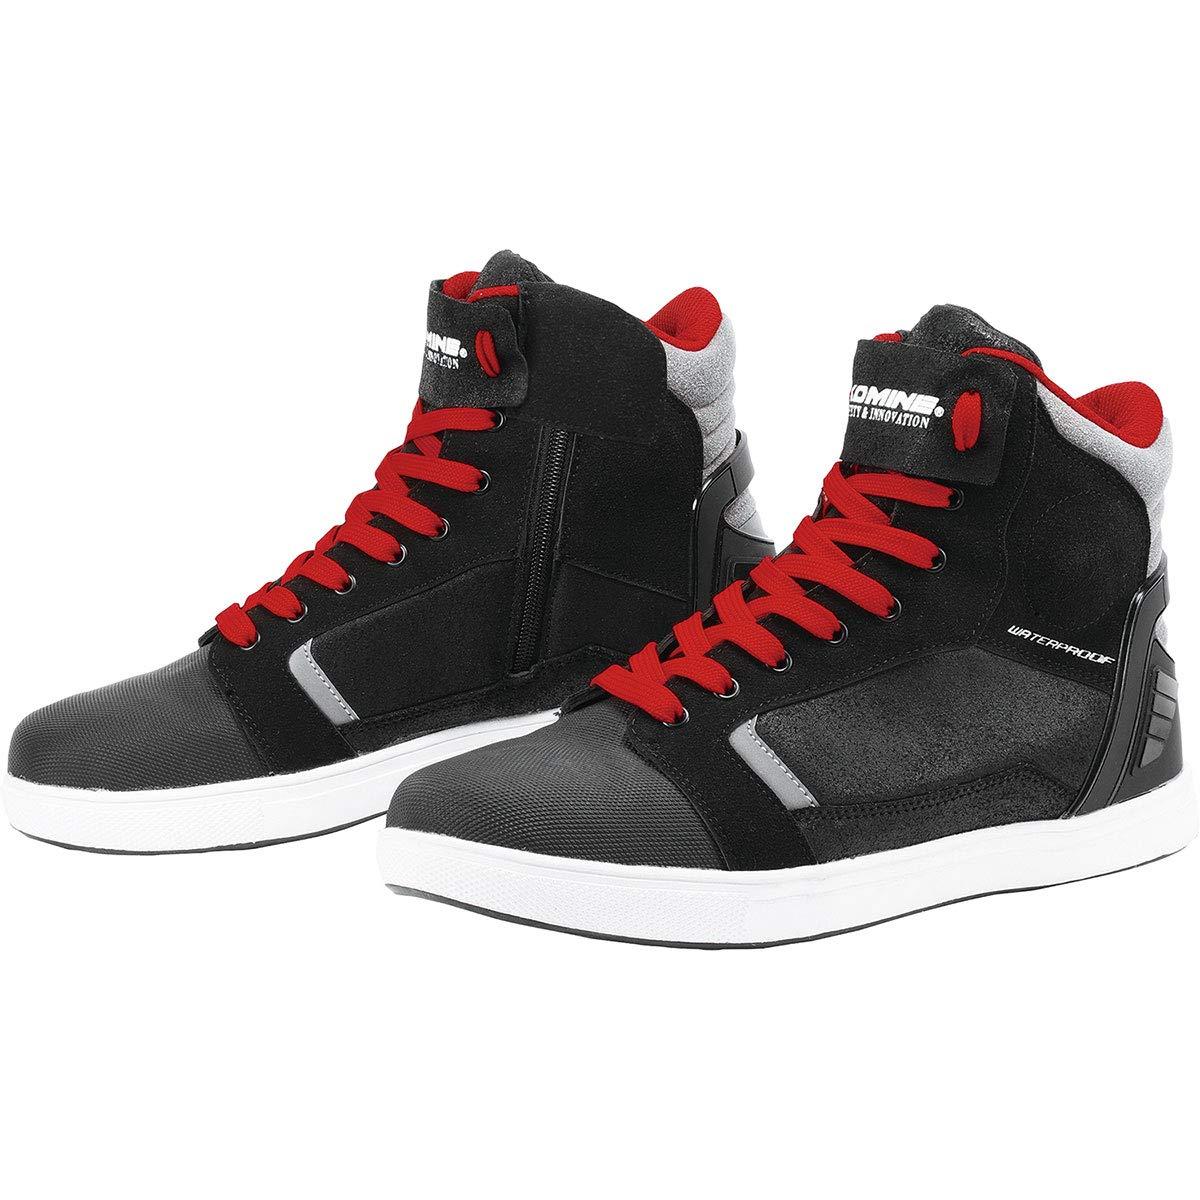 BK-084 Protect WP Riding Sneaker i:05-084 F:Black TCY:24.5 R~l(Komine)